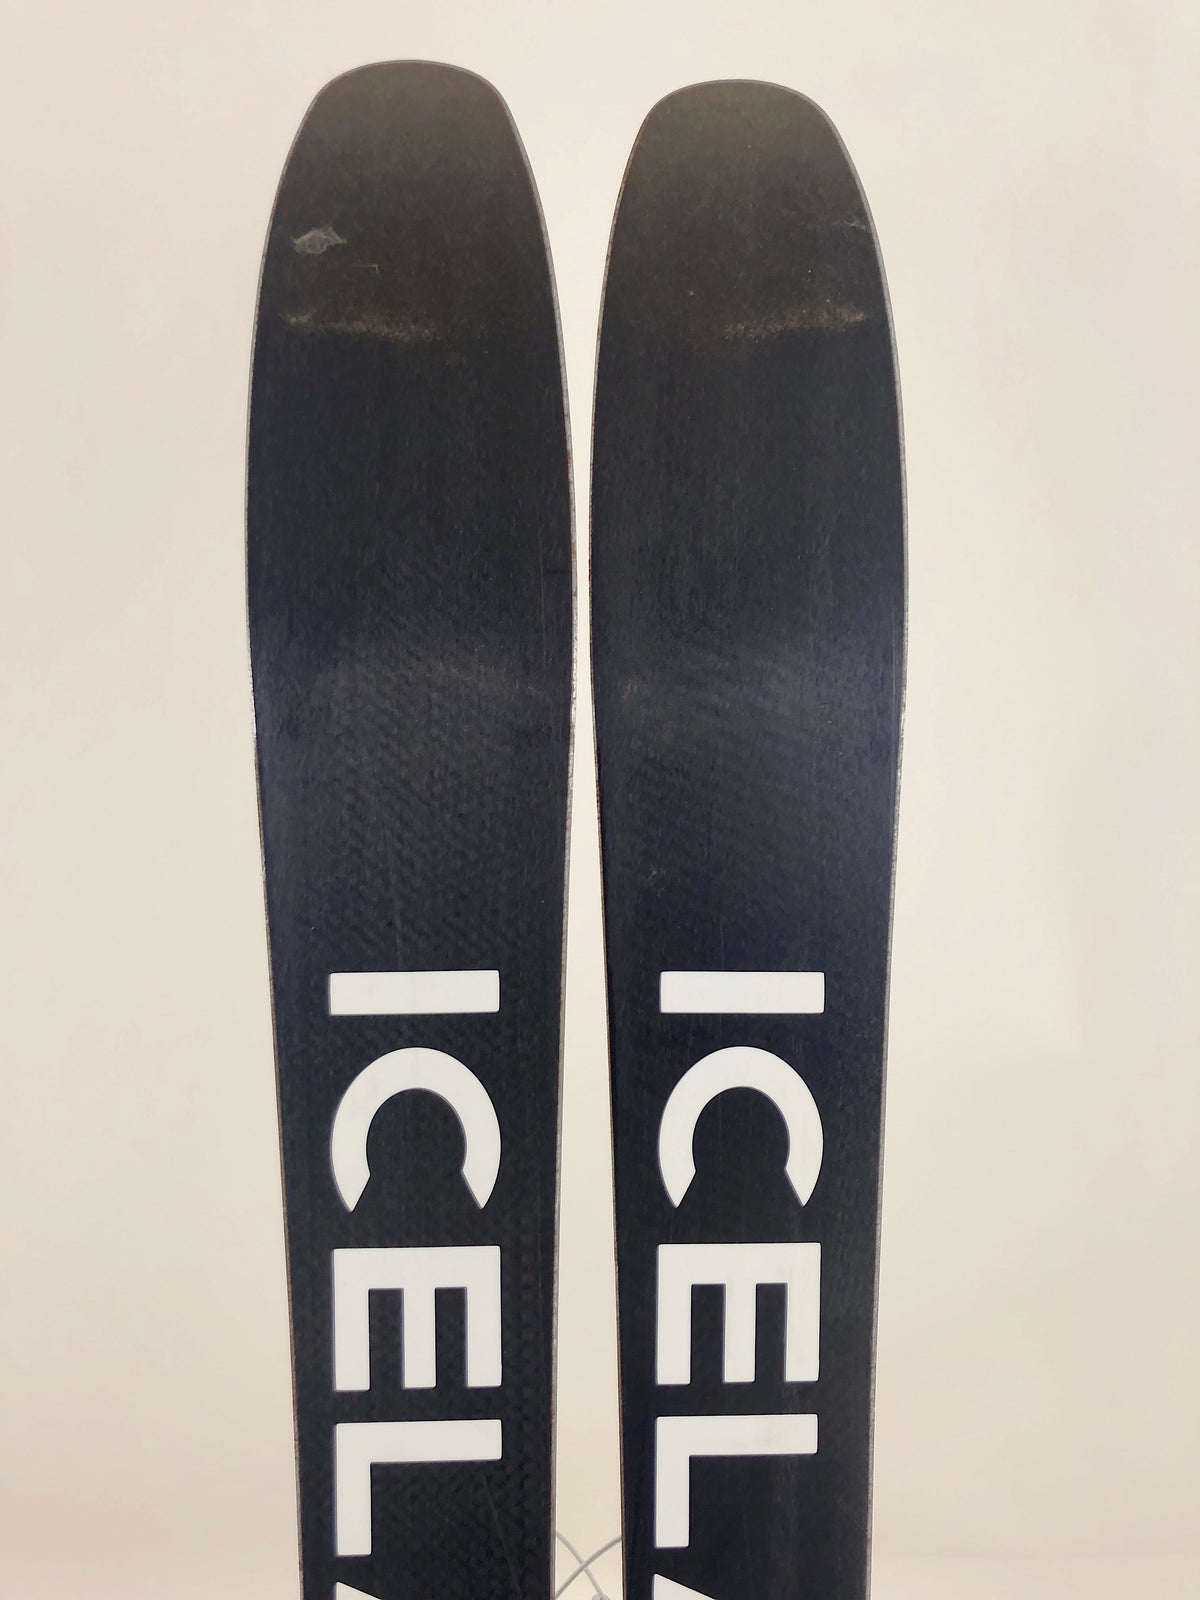 171cm Icelantic Keeper w/ 22 Designs Vice Sm (Used)